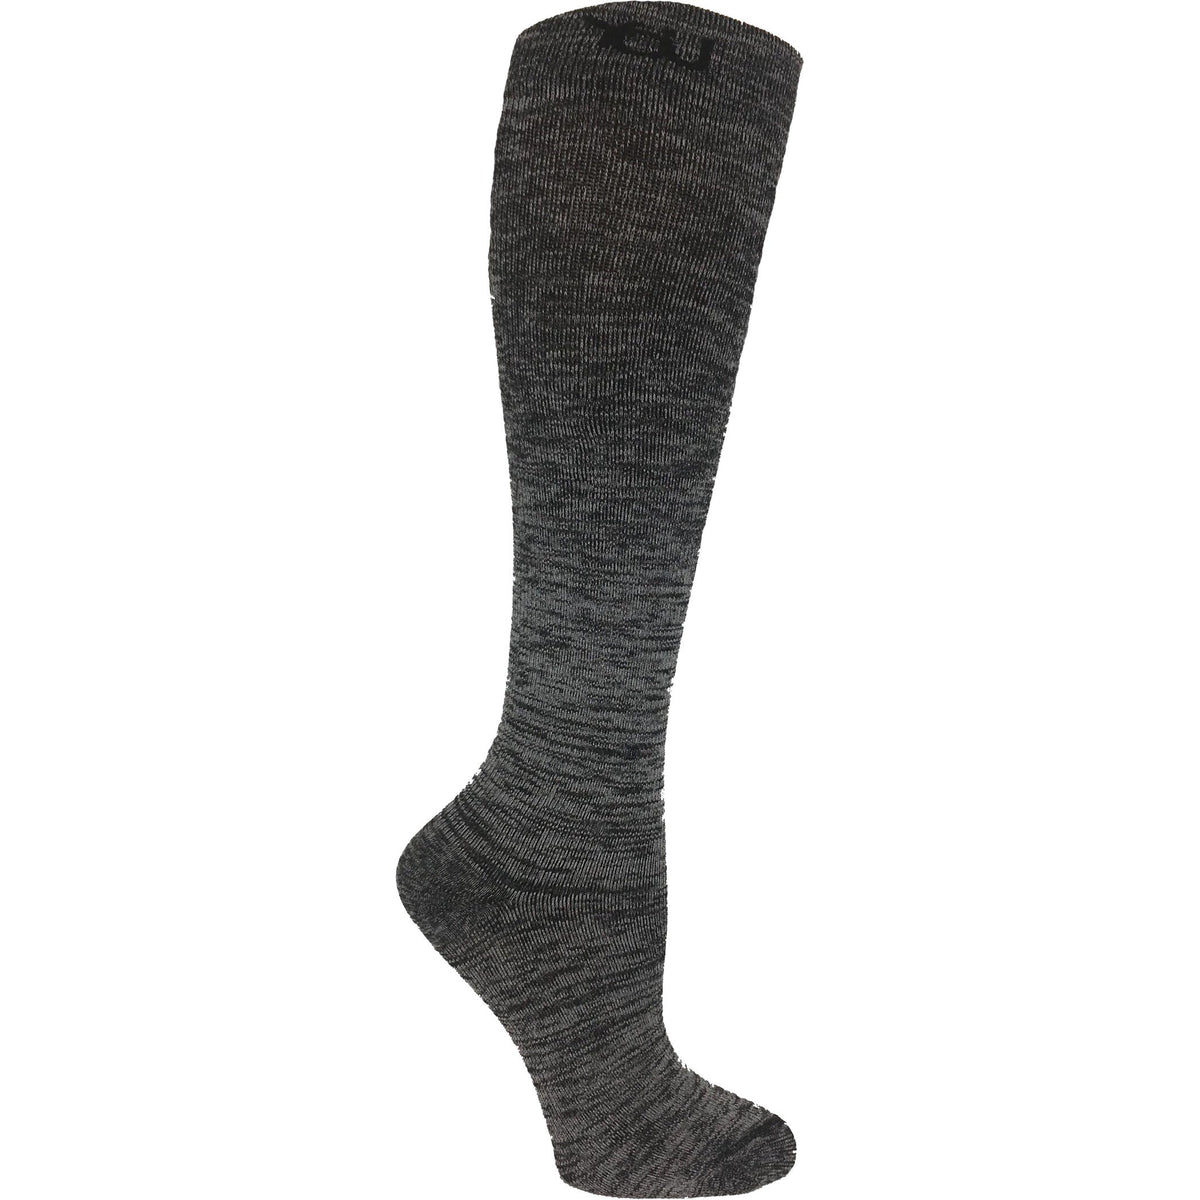 Light Compression Knee-High Socks 15-20 mmHg